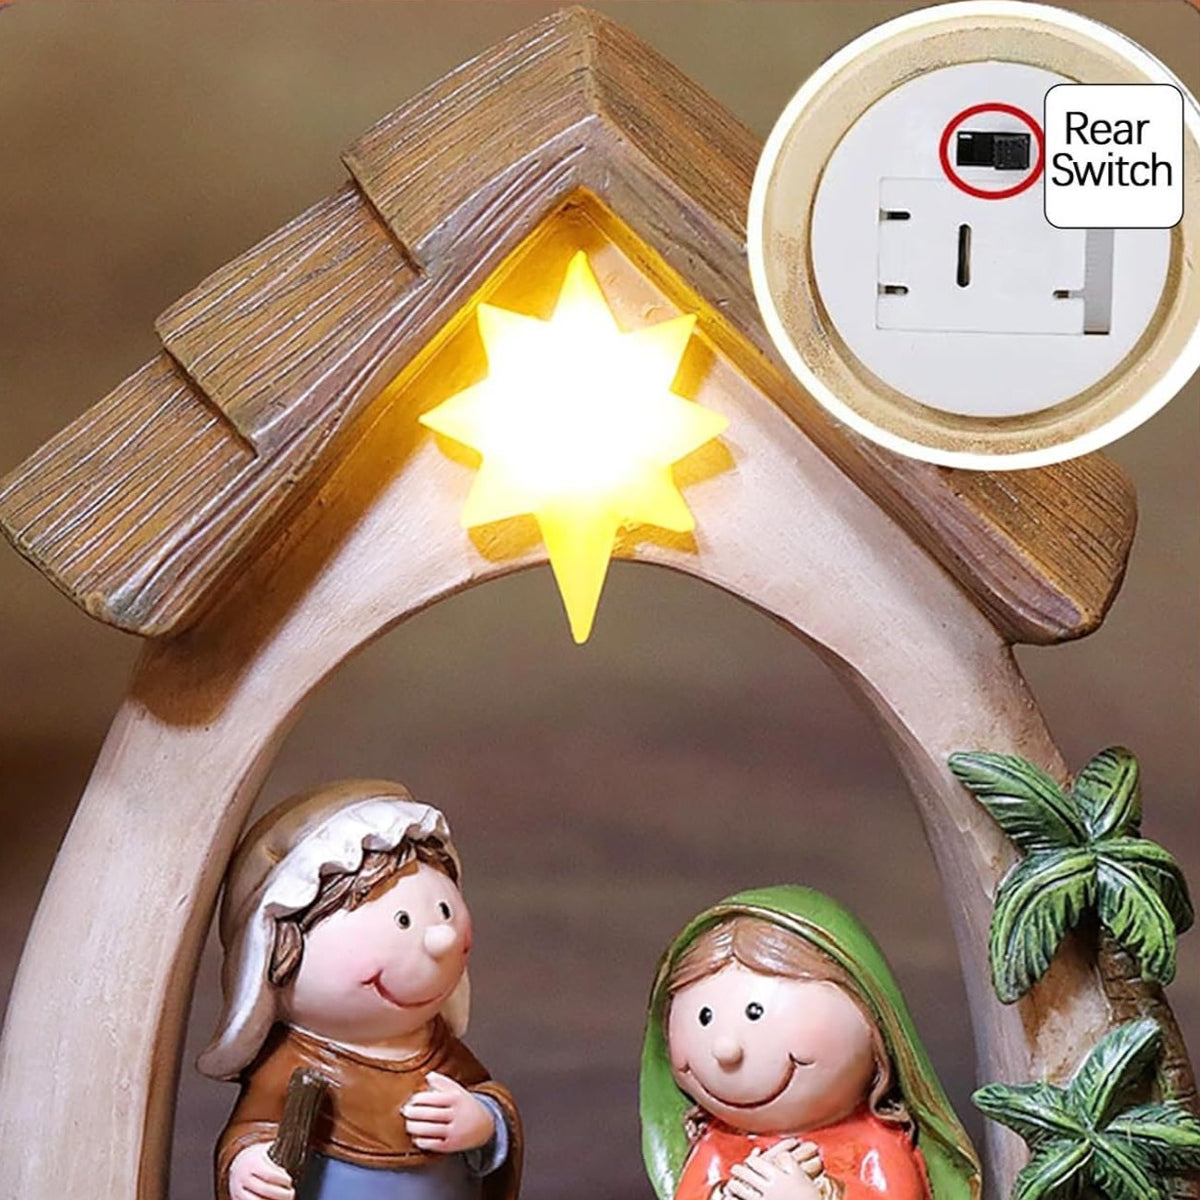 Nativity Scene Figures Ornaments, Resin Jesus Born Ornaments, 12-Piece Set